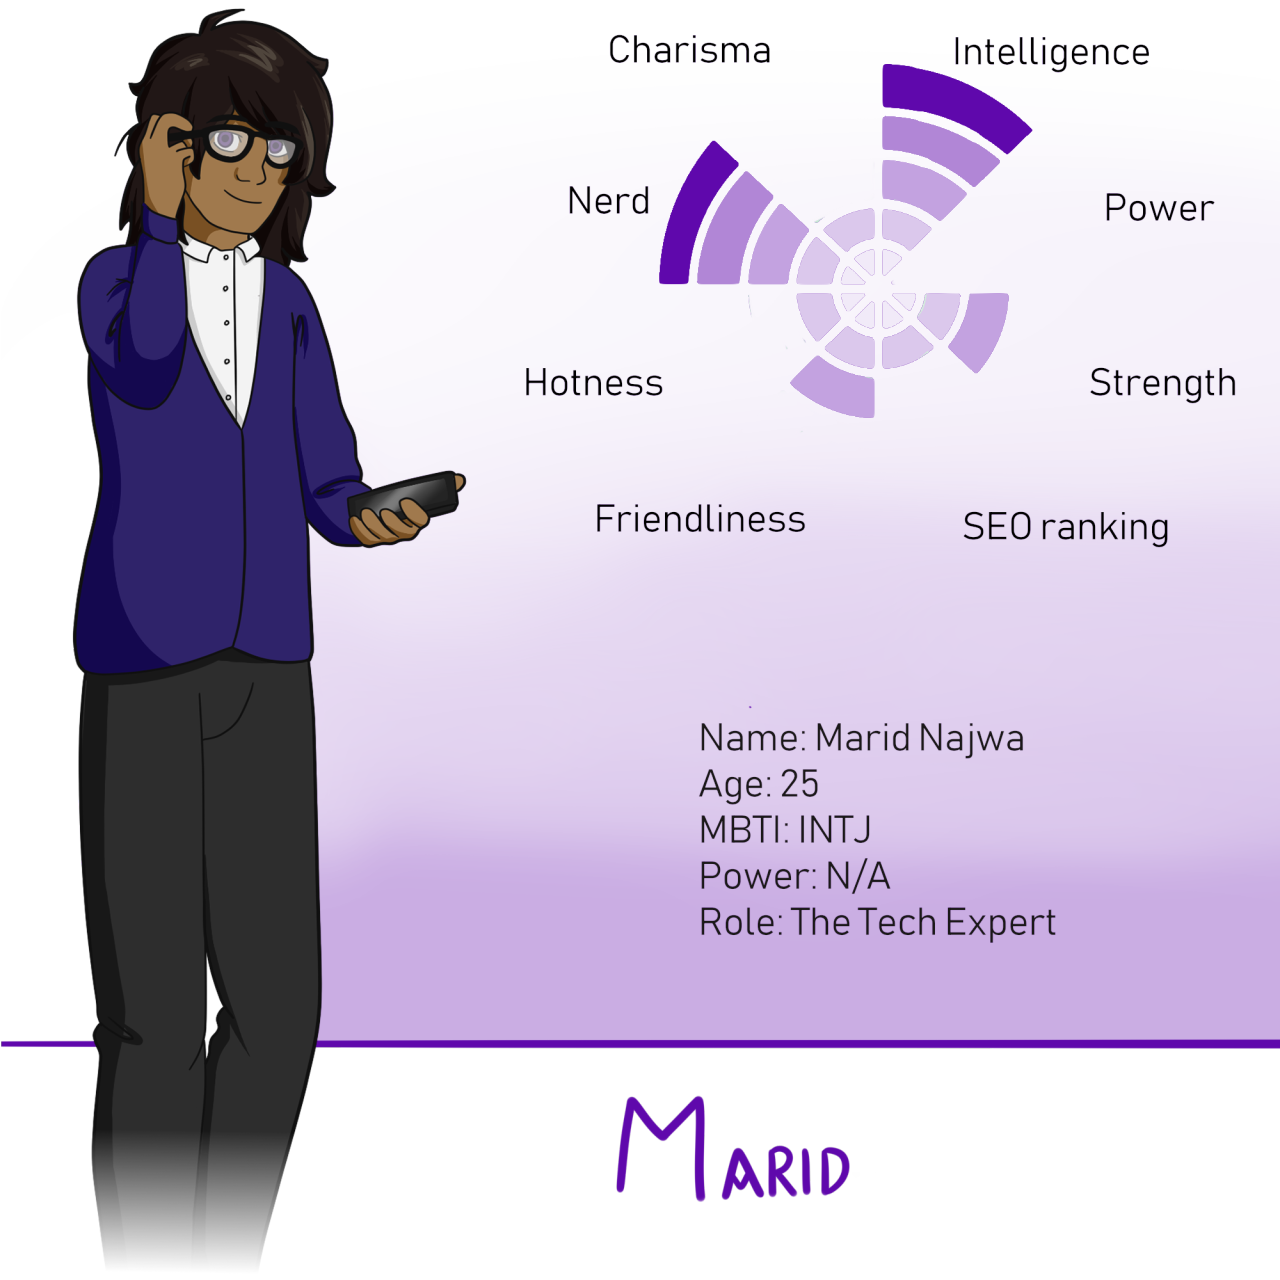 Name: Marid Najwa. Age: 25. MBTI: INTJ. Power: N/A. Role: The Tech Expert.